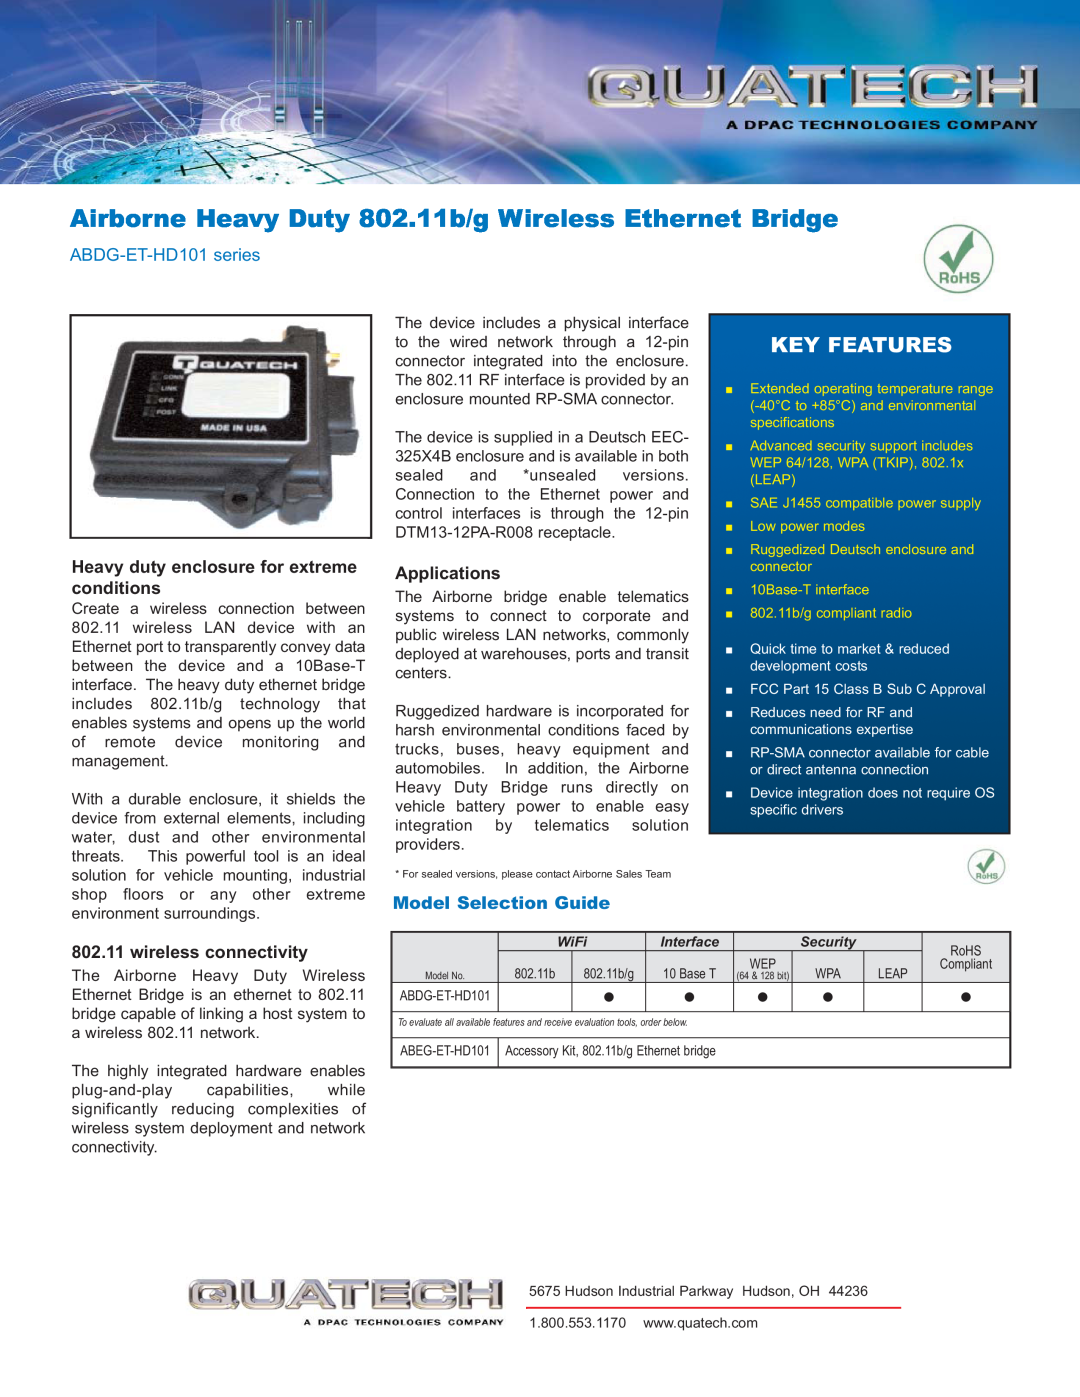 Quatech ABDG-ET-HD101 specifications Airborne Heavy Duty 802.11b/g Wireless Ethernet Bridge, Key Features, Applications 